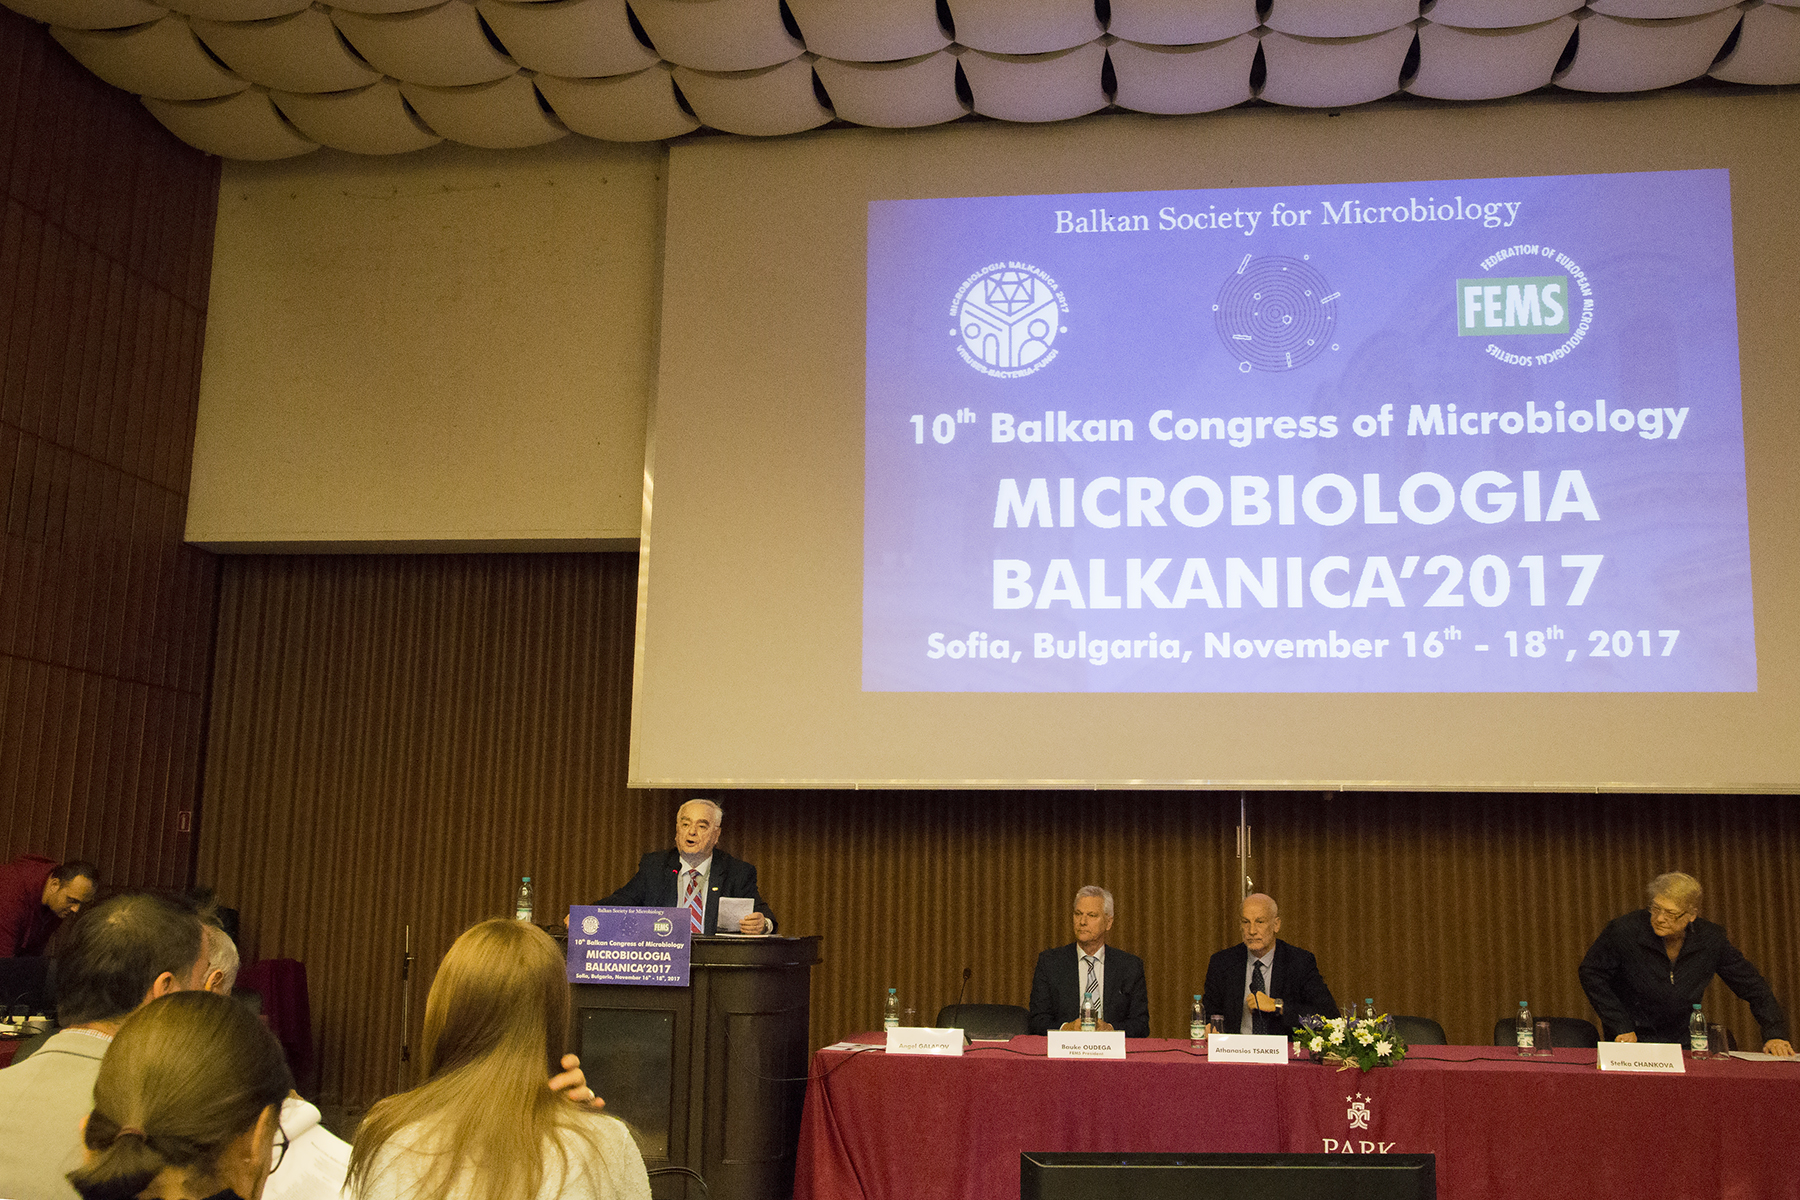 10th Balkan Congress of Microbiology/Microbiologia Balkanica 2017, Sofia, November 16-18th, 2017